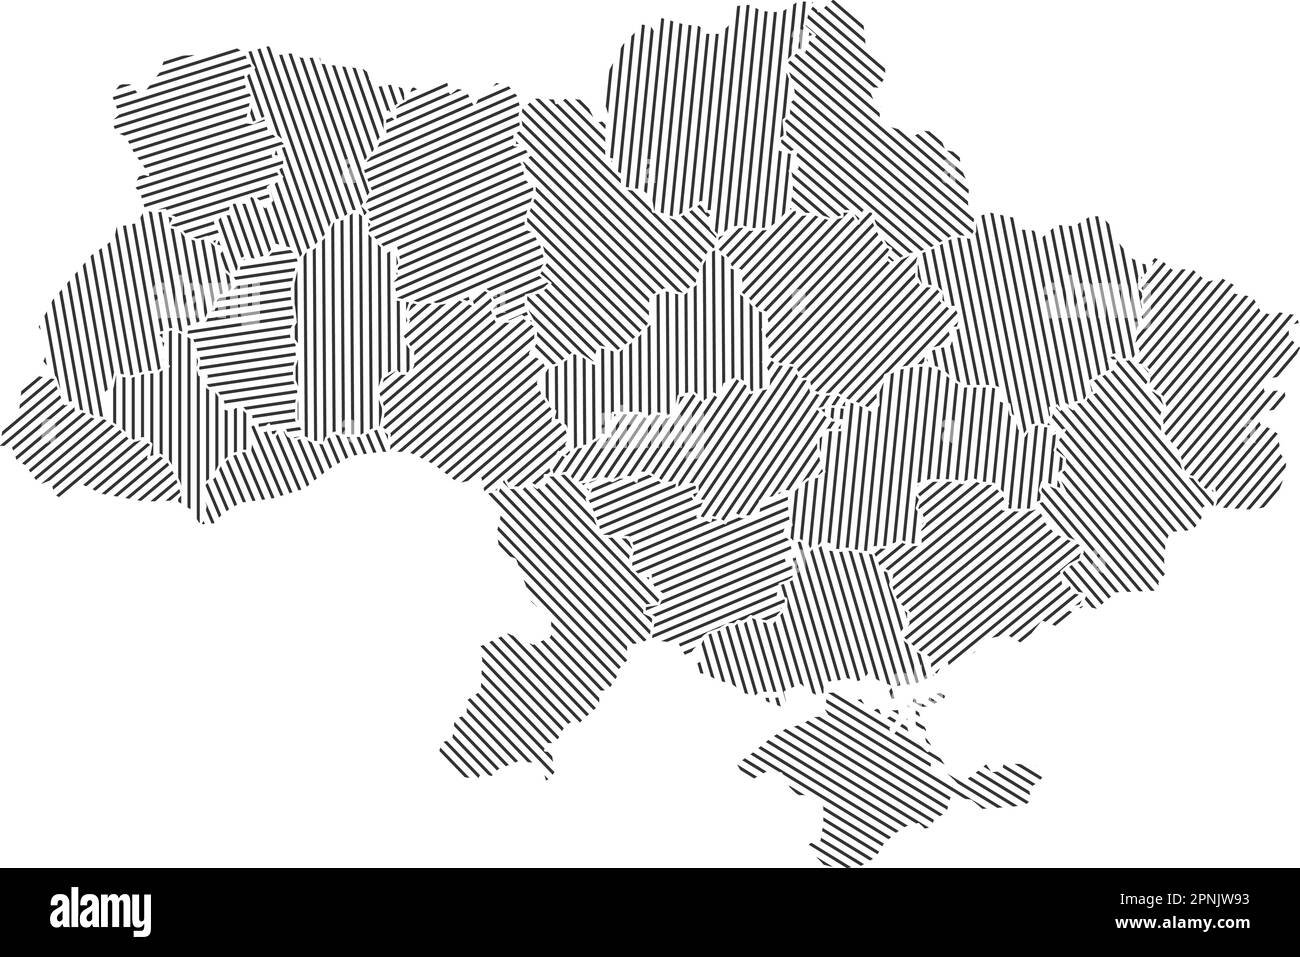 Kartensymbol Ukraine. Flache Landkunstlinie. Isoliertes Vektorsymbol, Abbildung EPS10 Stock Vektor